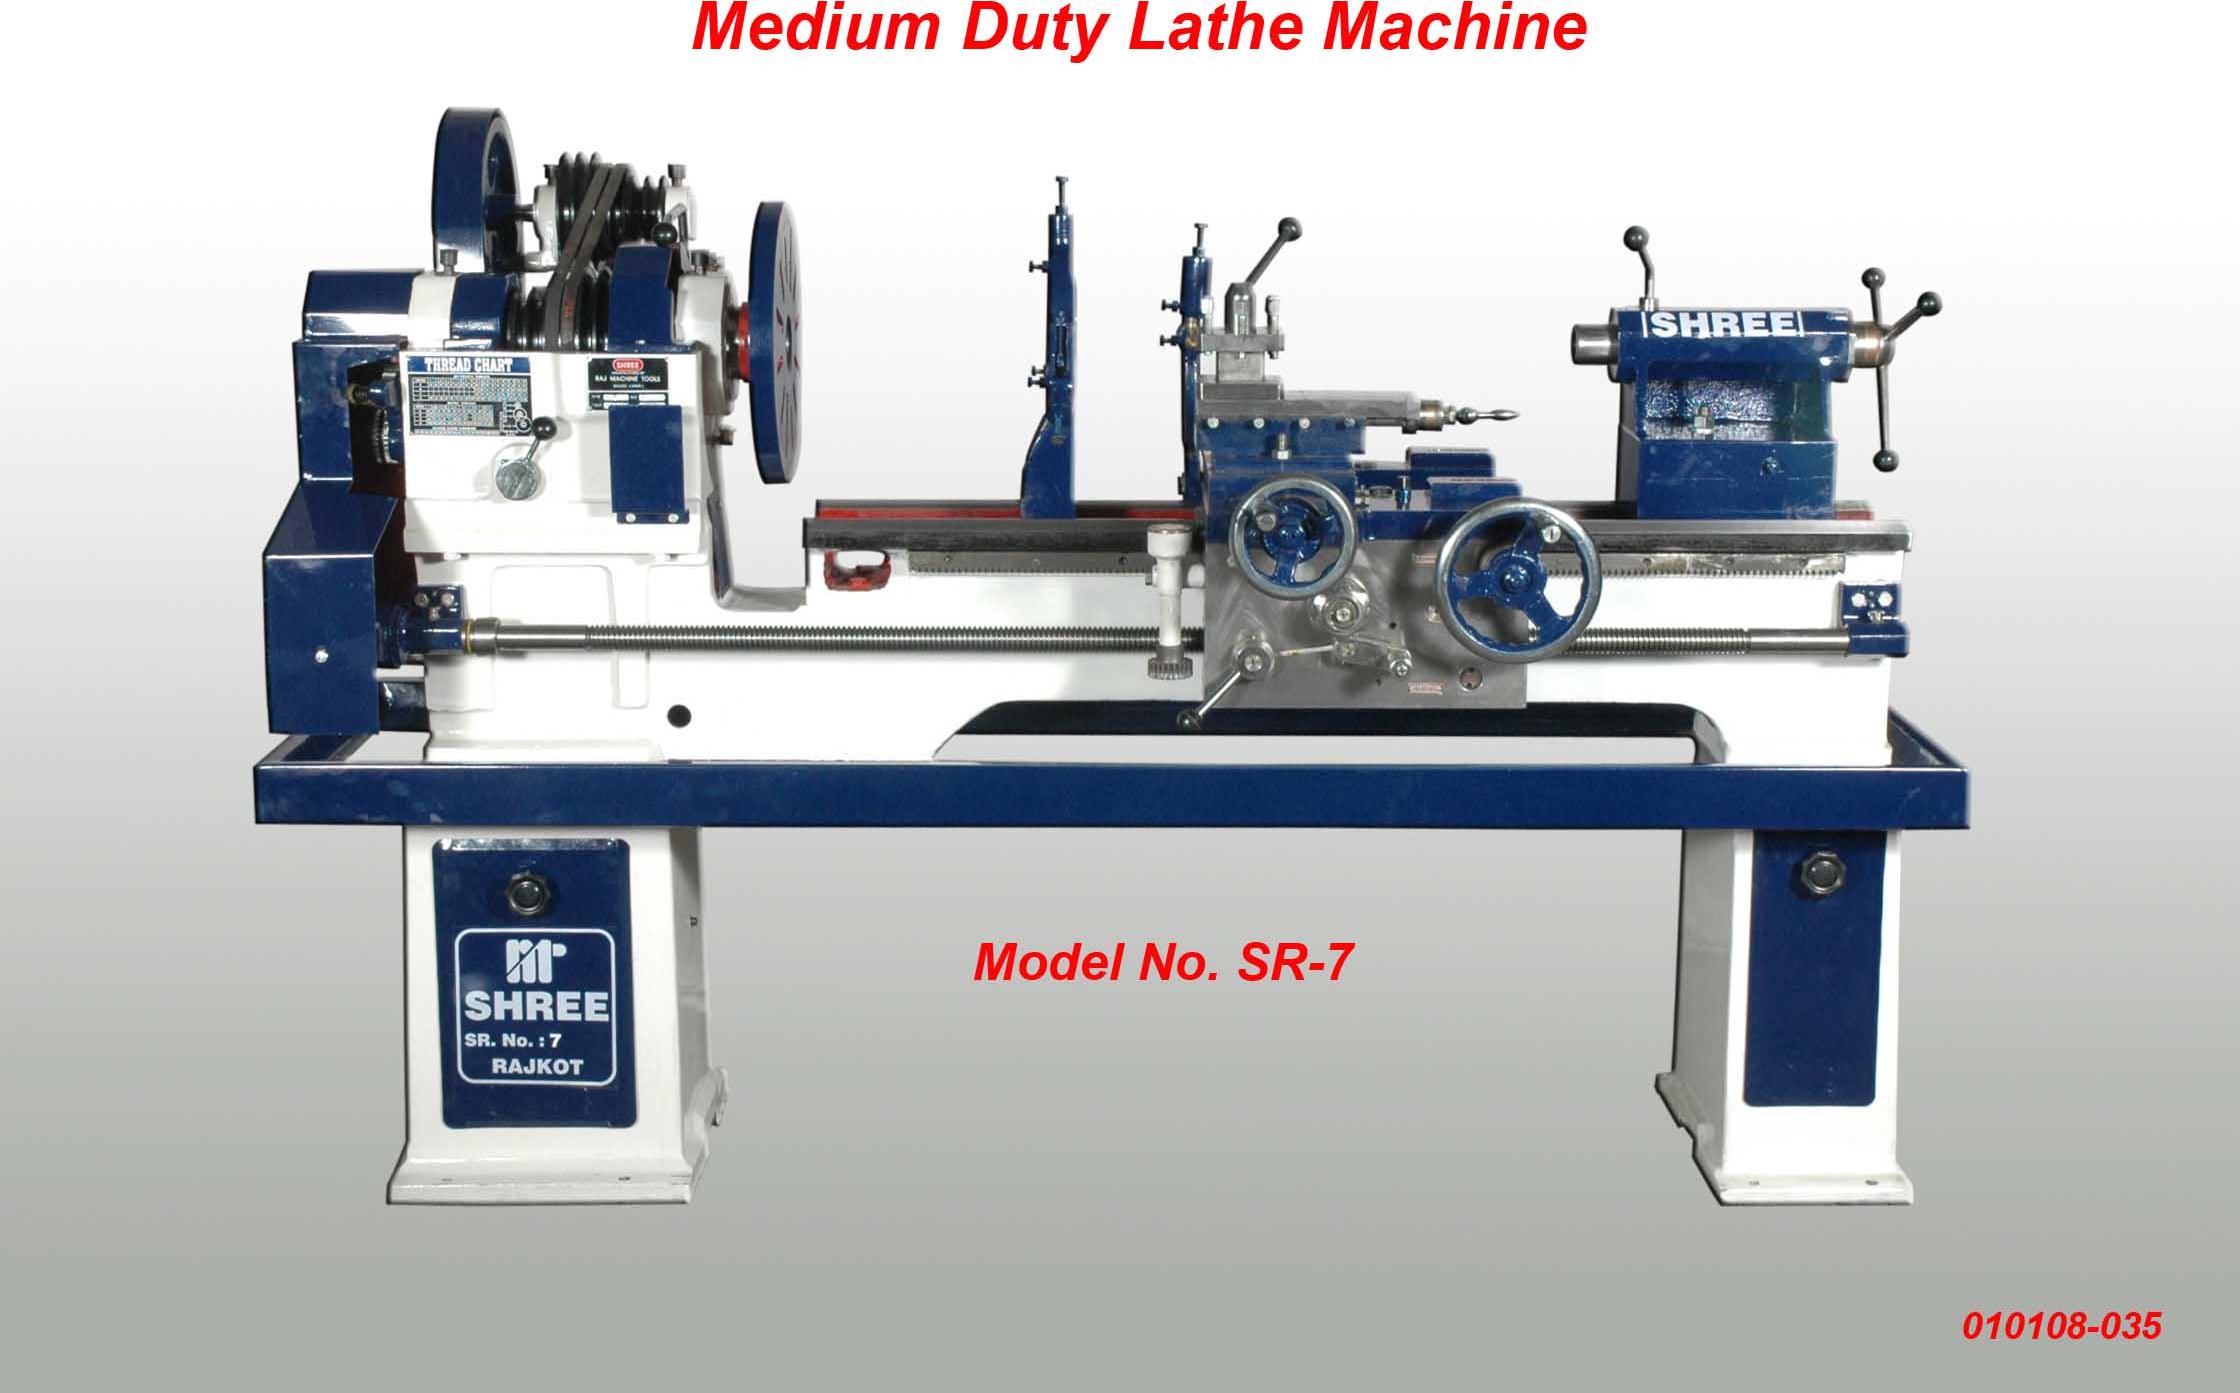 Manufacturer of Lathe Machines from rajkot, Gujarat by Raj Machine Tools